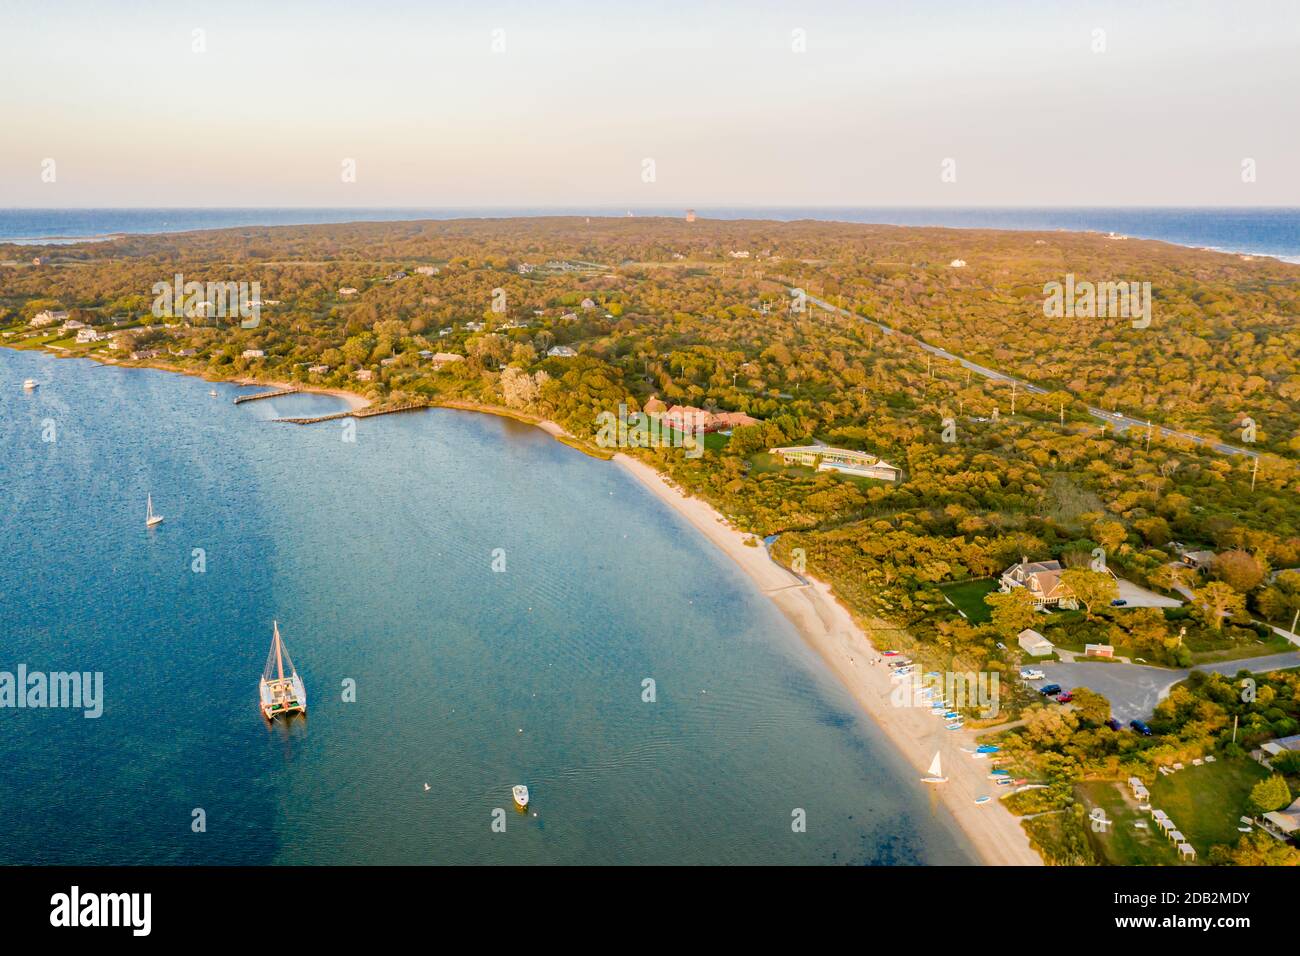 aerial image of lake Montauk and highway 27, Montauk, NY Stock Photo